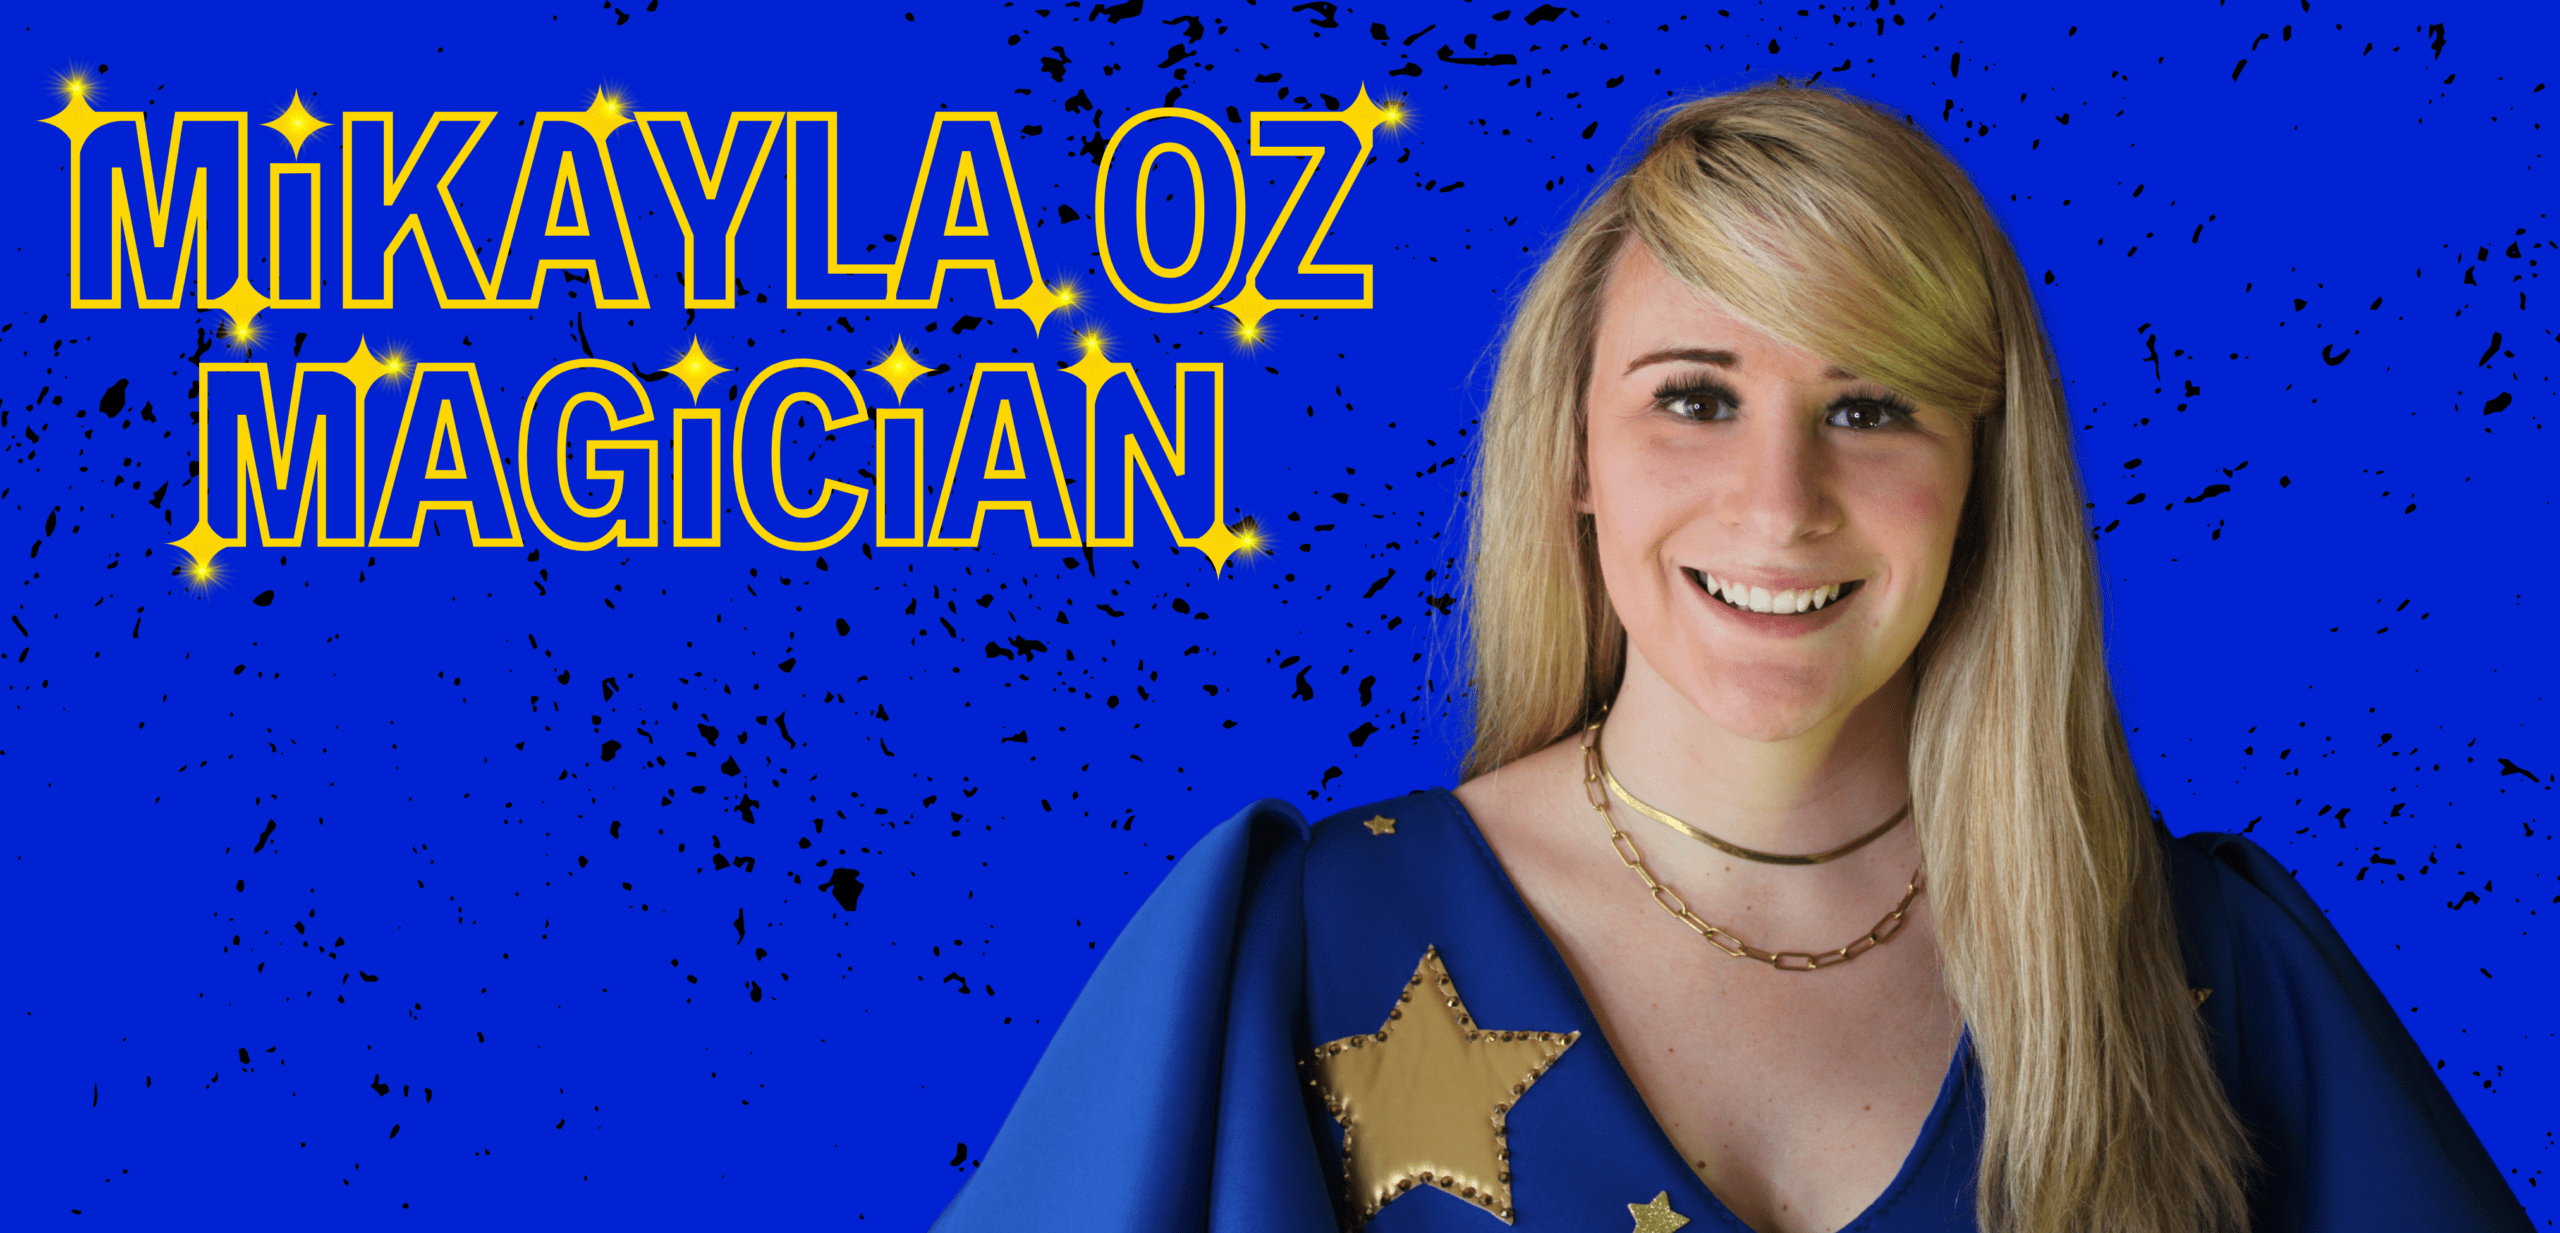 Mikayla Oz - Female Magician - International Rising Star of Magic